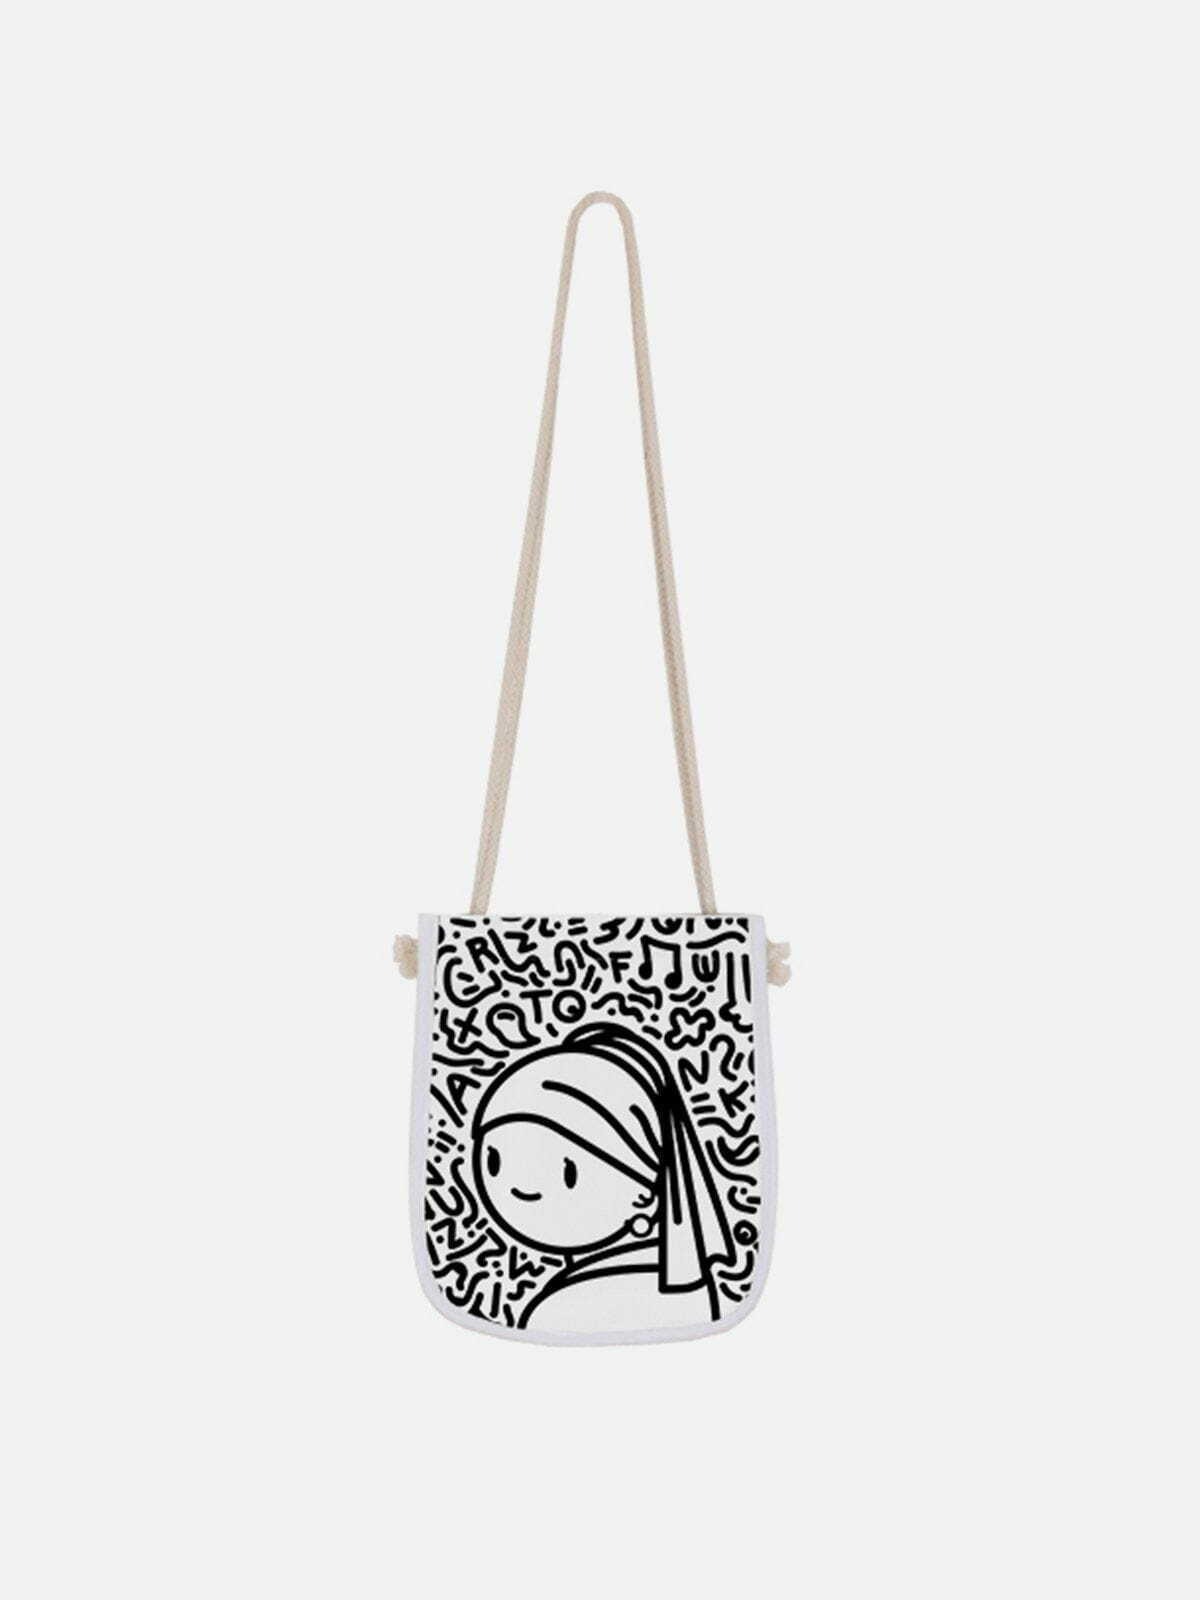 graffiti girl print crossbody bag   edgy urban fashion accessory 8964